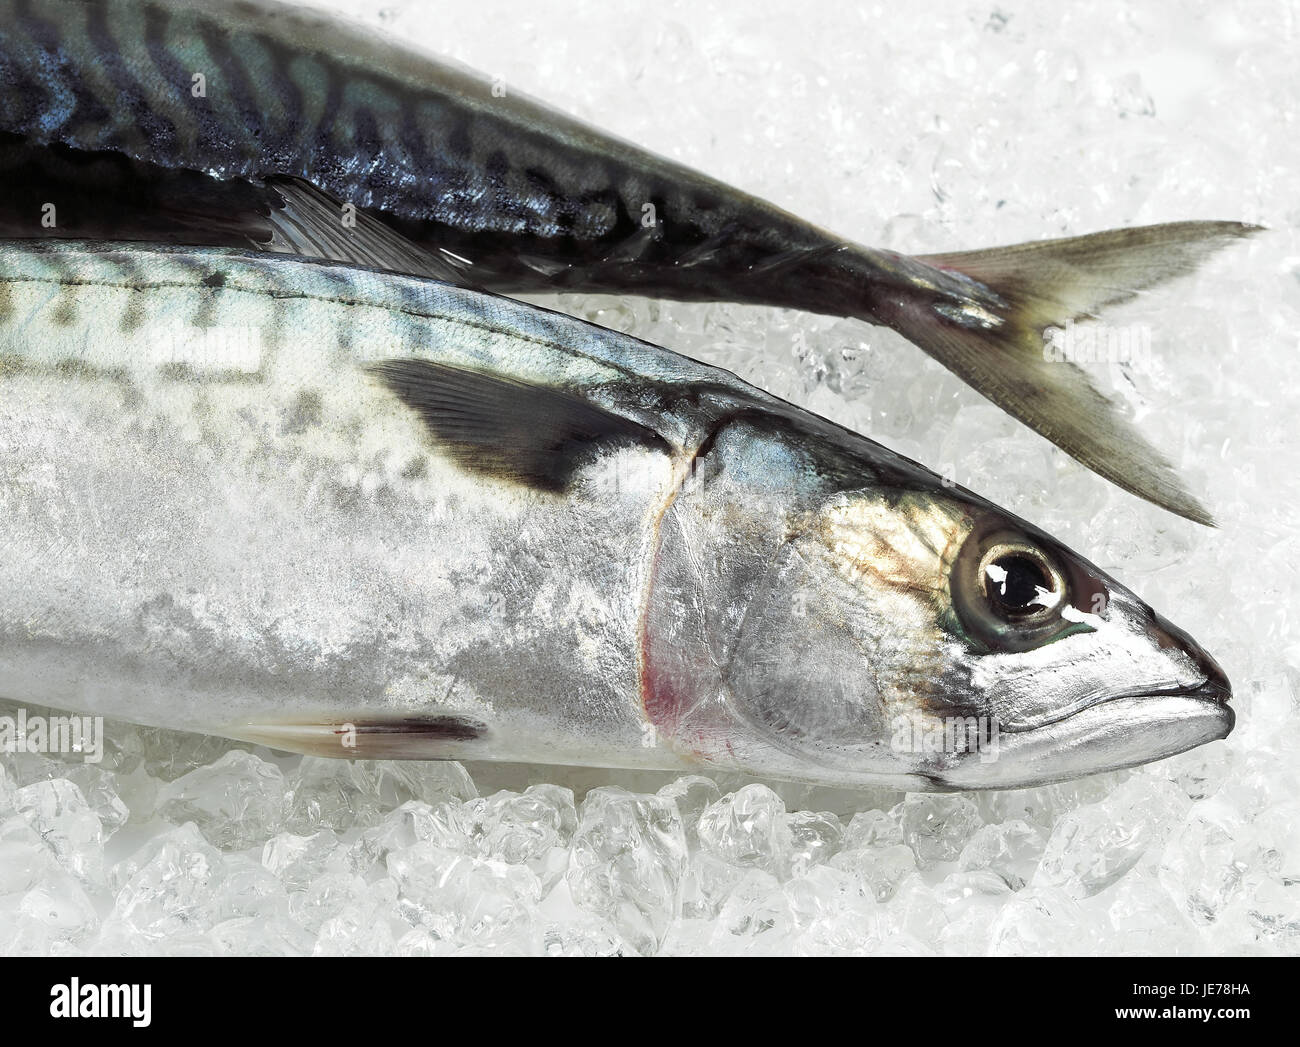 Mackerels, Scomber scombrus, fresh fish on E sharp, Stock Photo